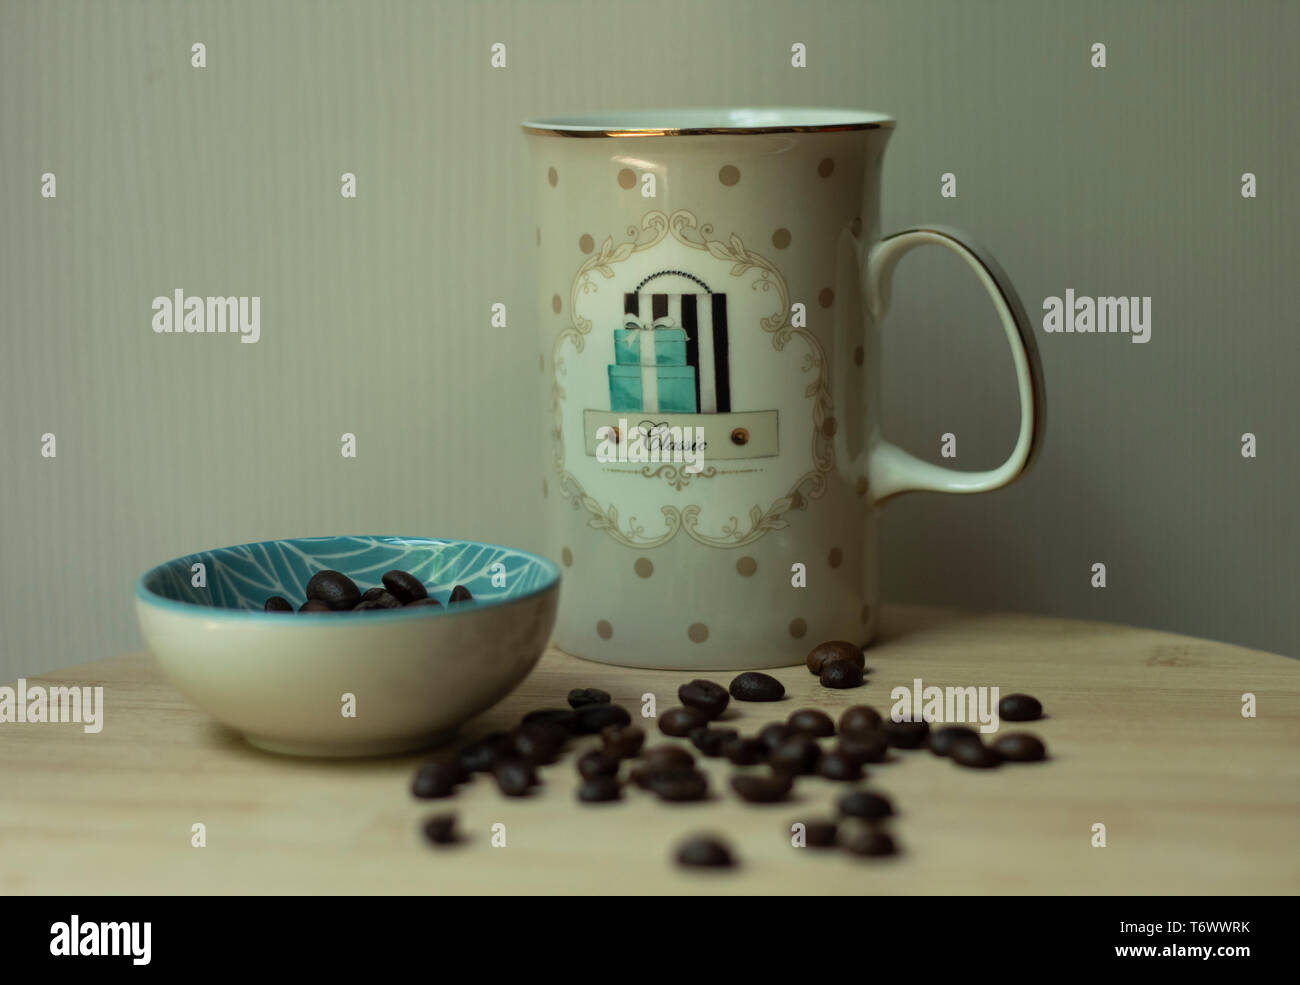 Coffee mug with some coffee beans Stock Photo